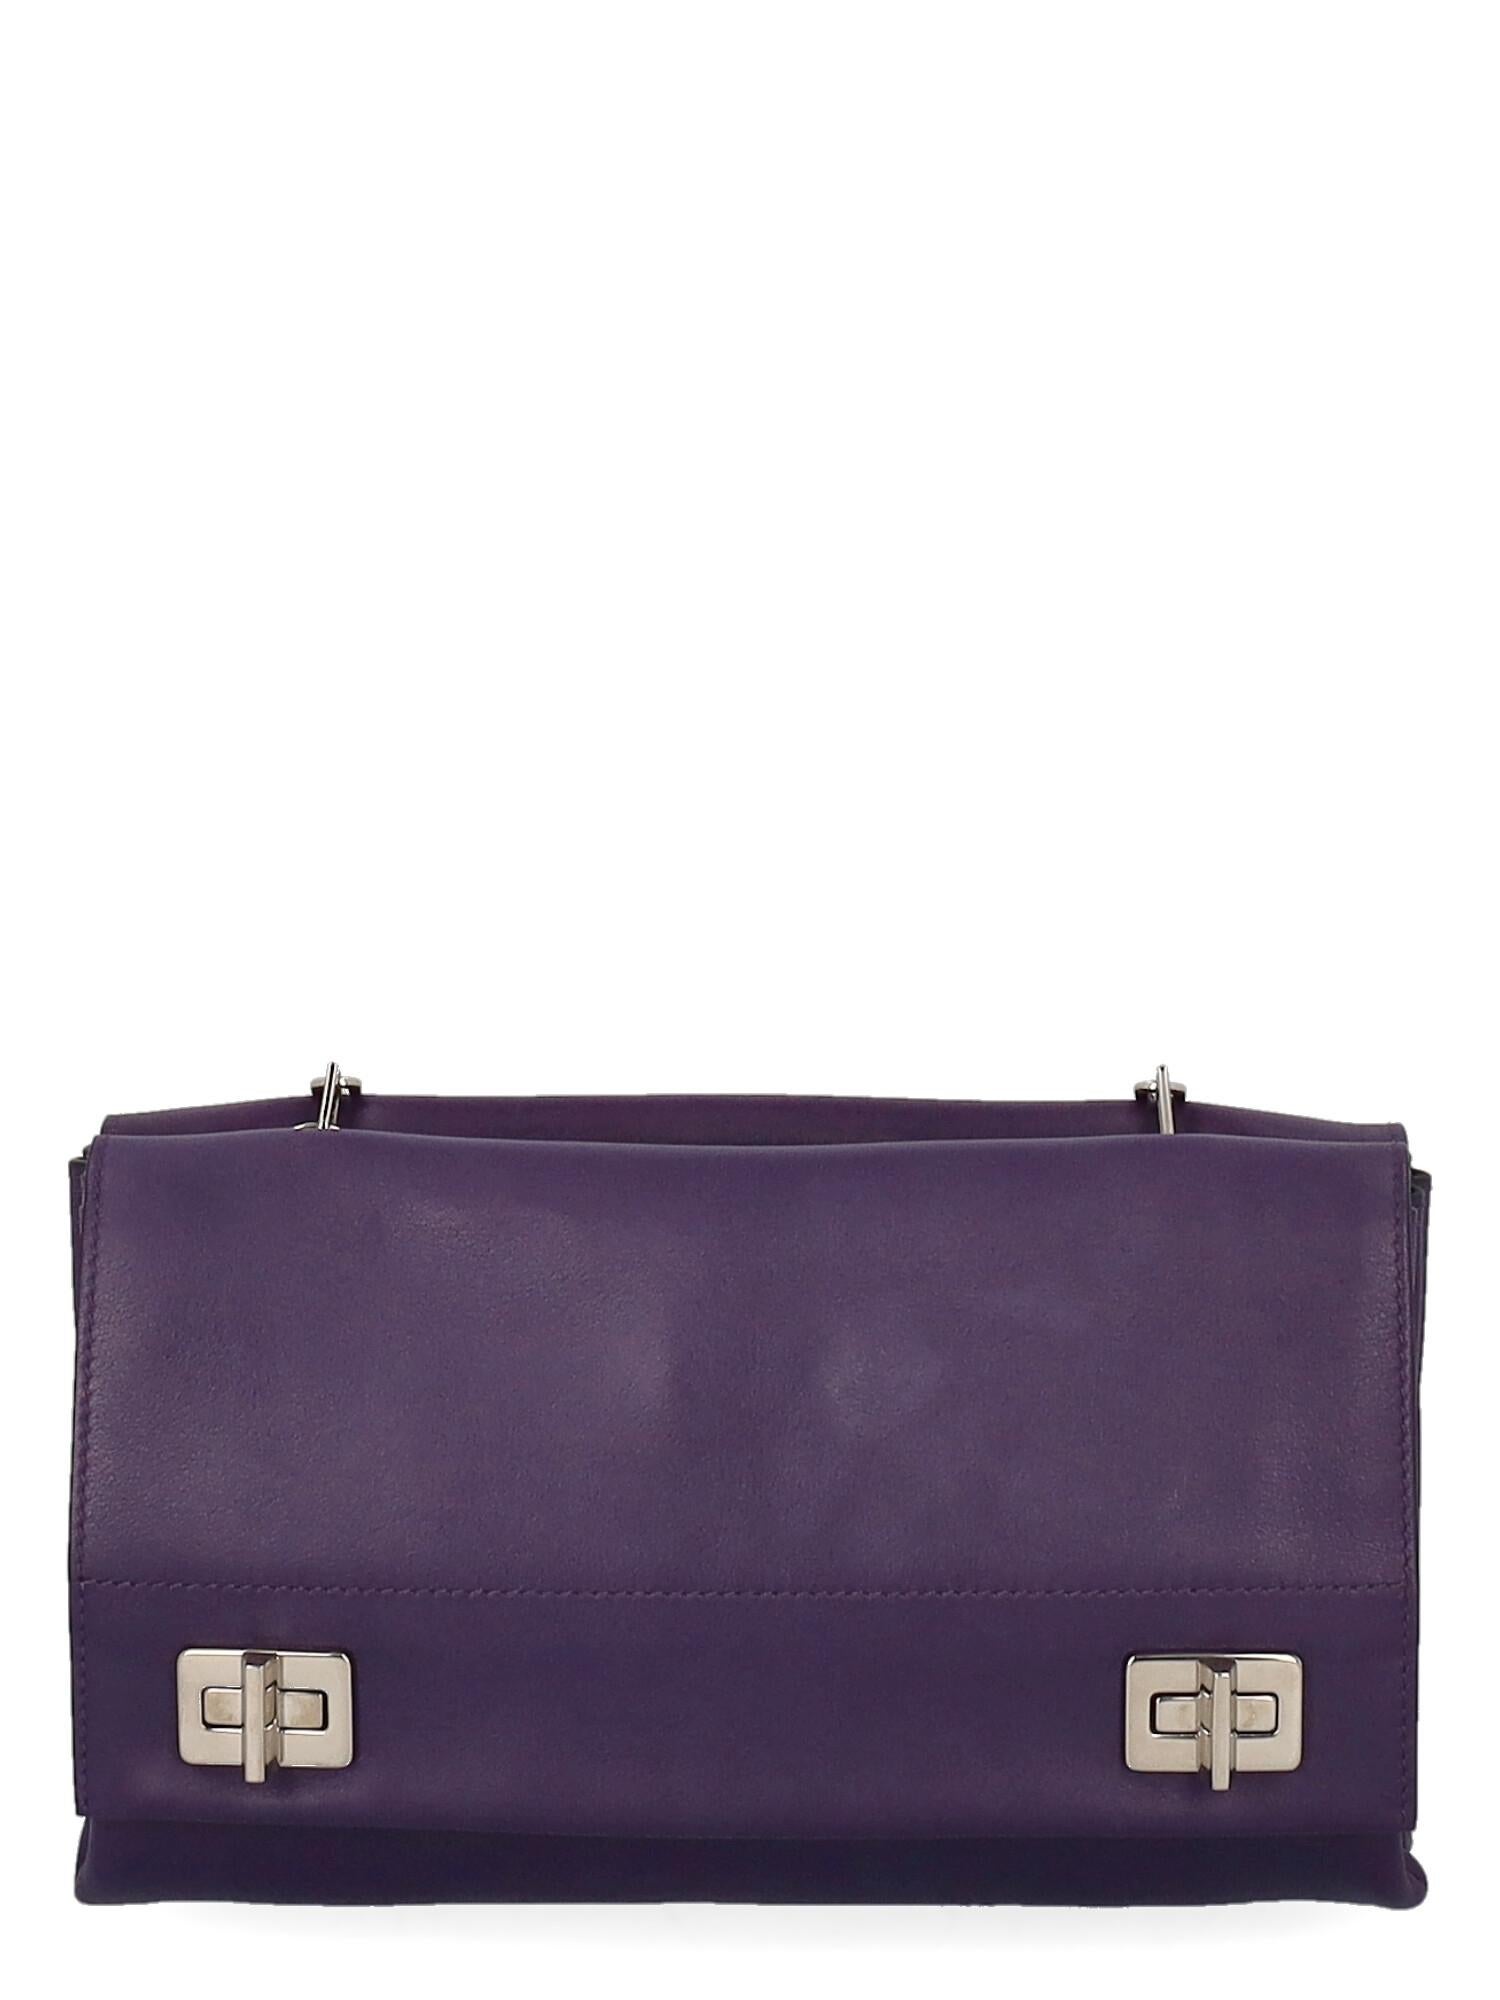 Black Prada  Women   Shoulder bags  Purple Leather  For Sale